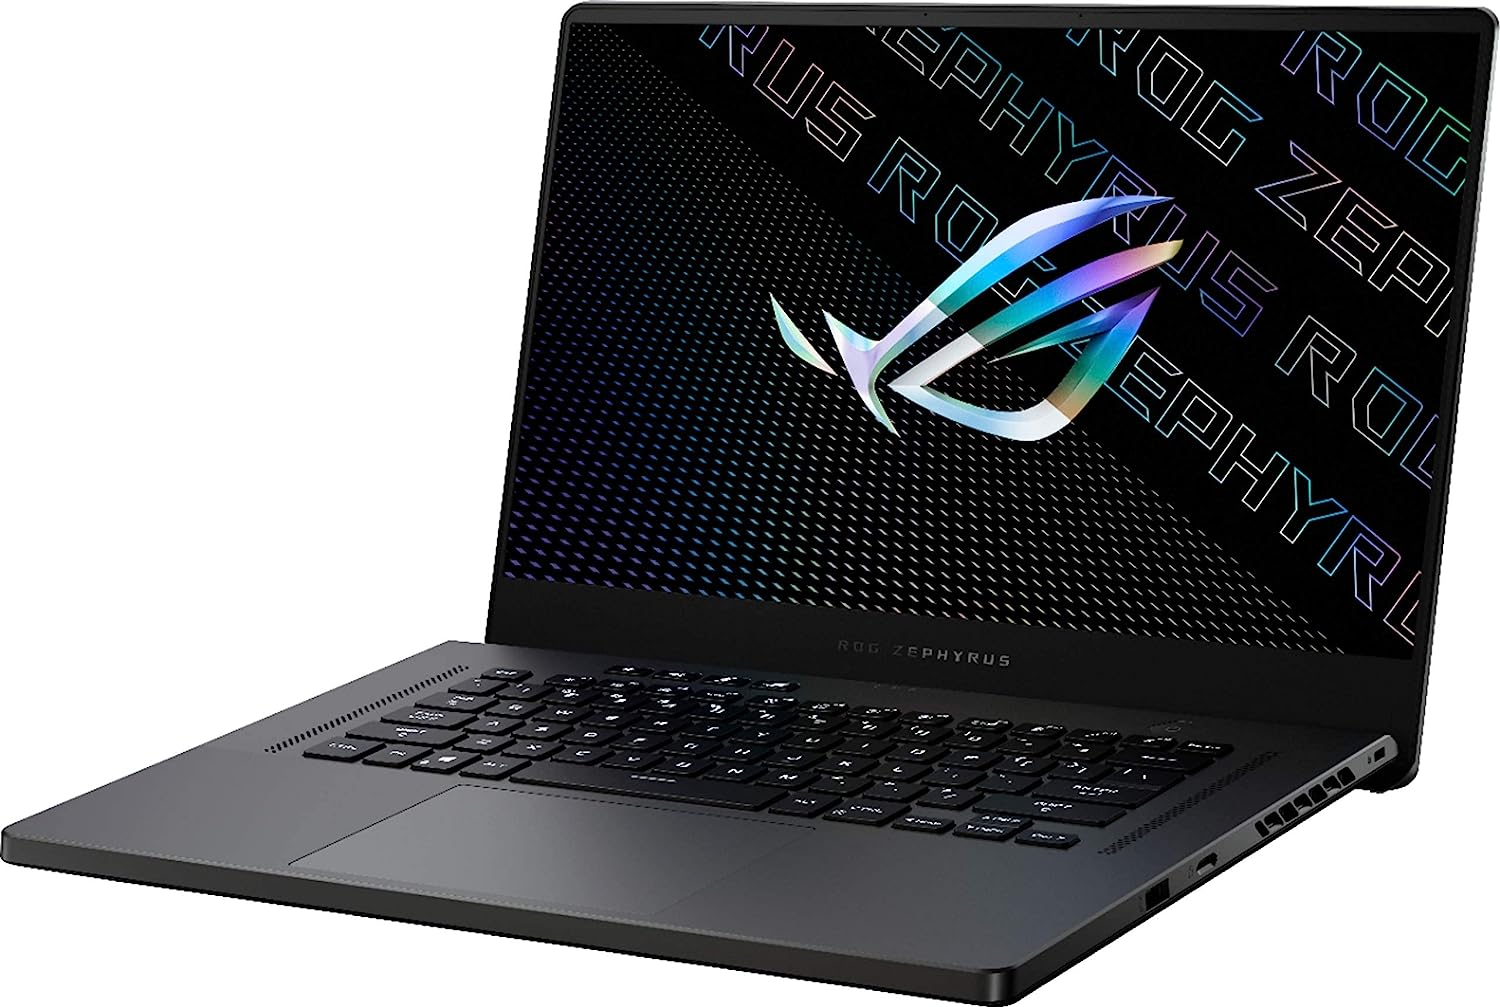 ASUS ROG Zephyrus 15.6" QHD Gaming Laptop